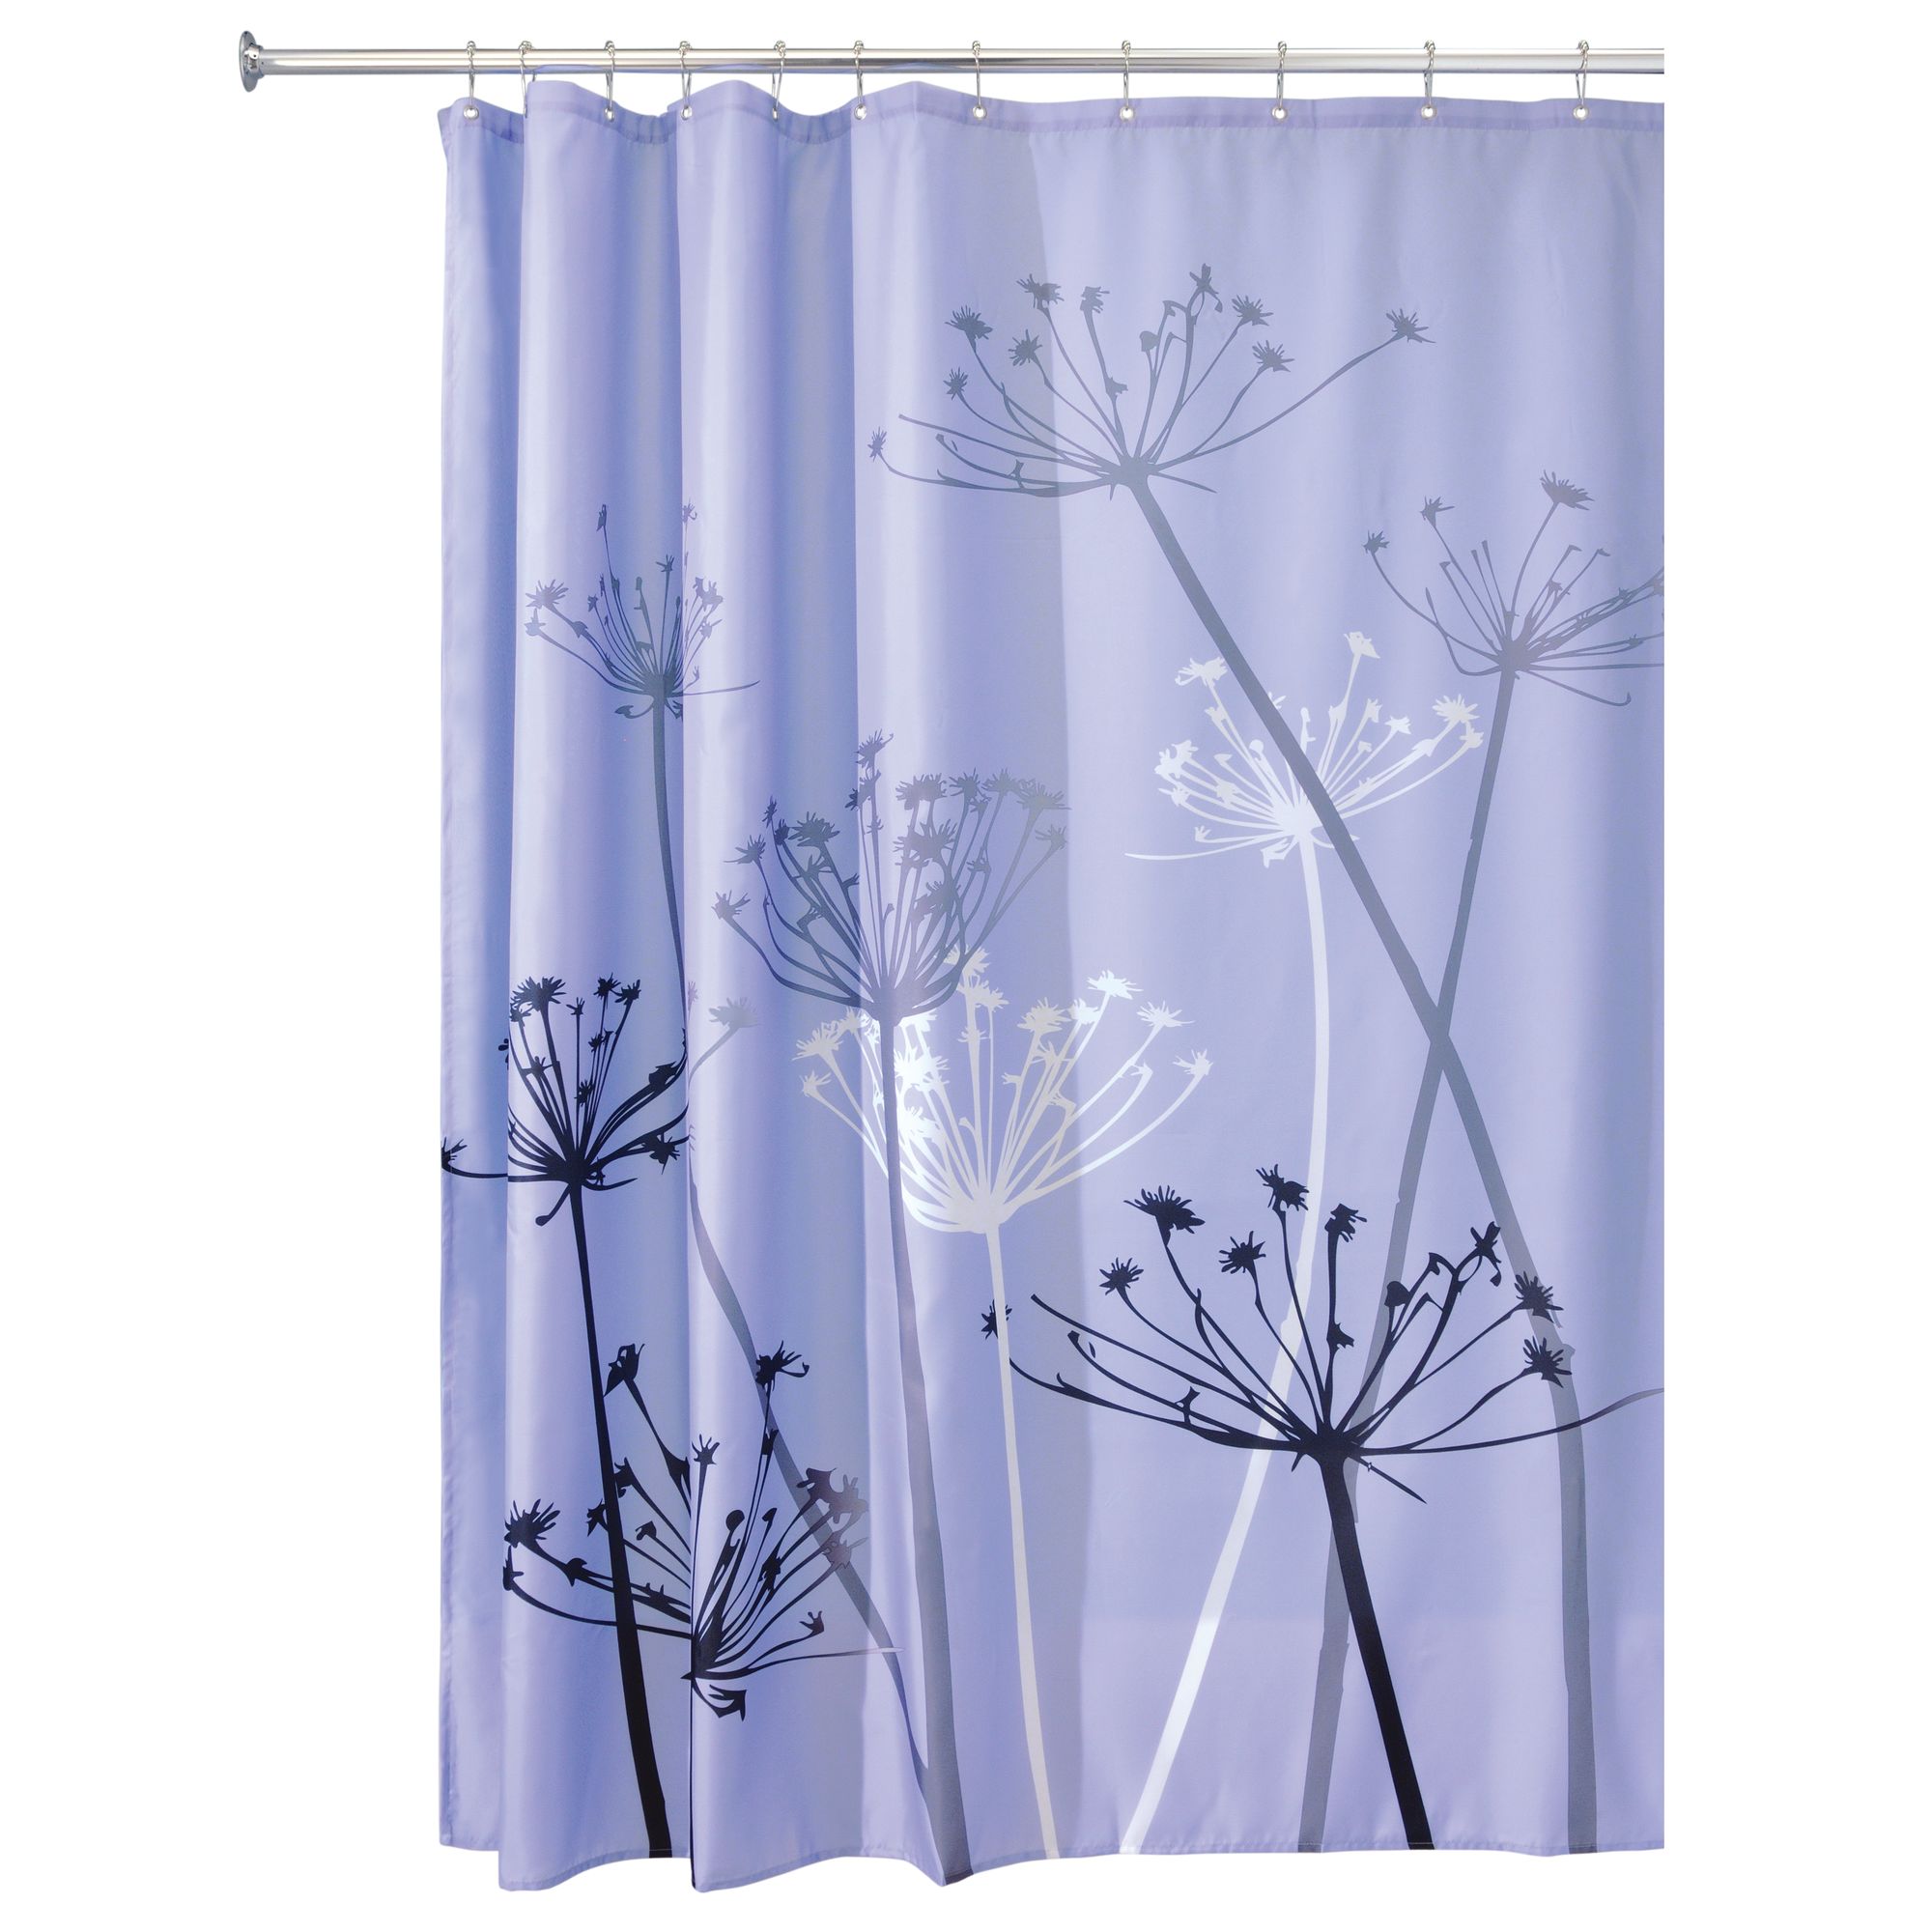 InterDesign Thistle Fabric Shower Curtain, Standard 72" x 72", Purple/Gray - image 1 of 3